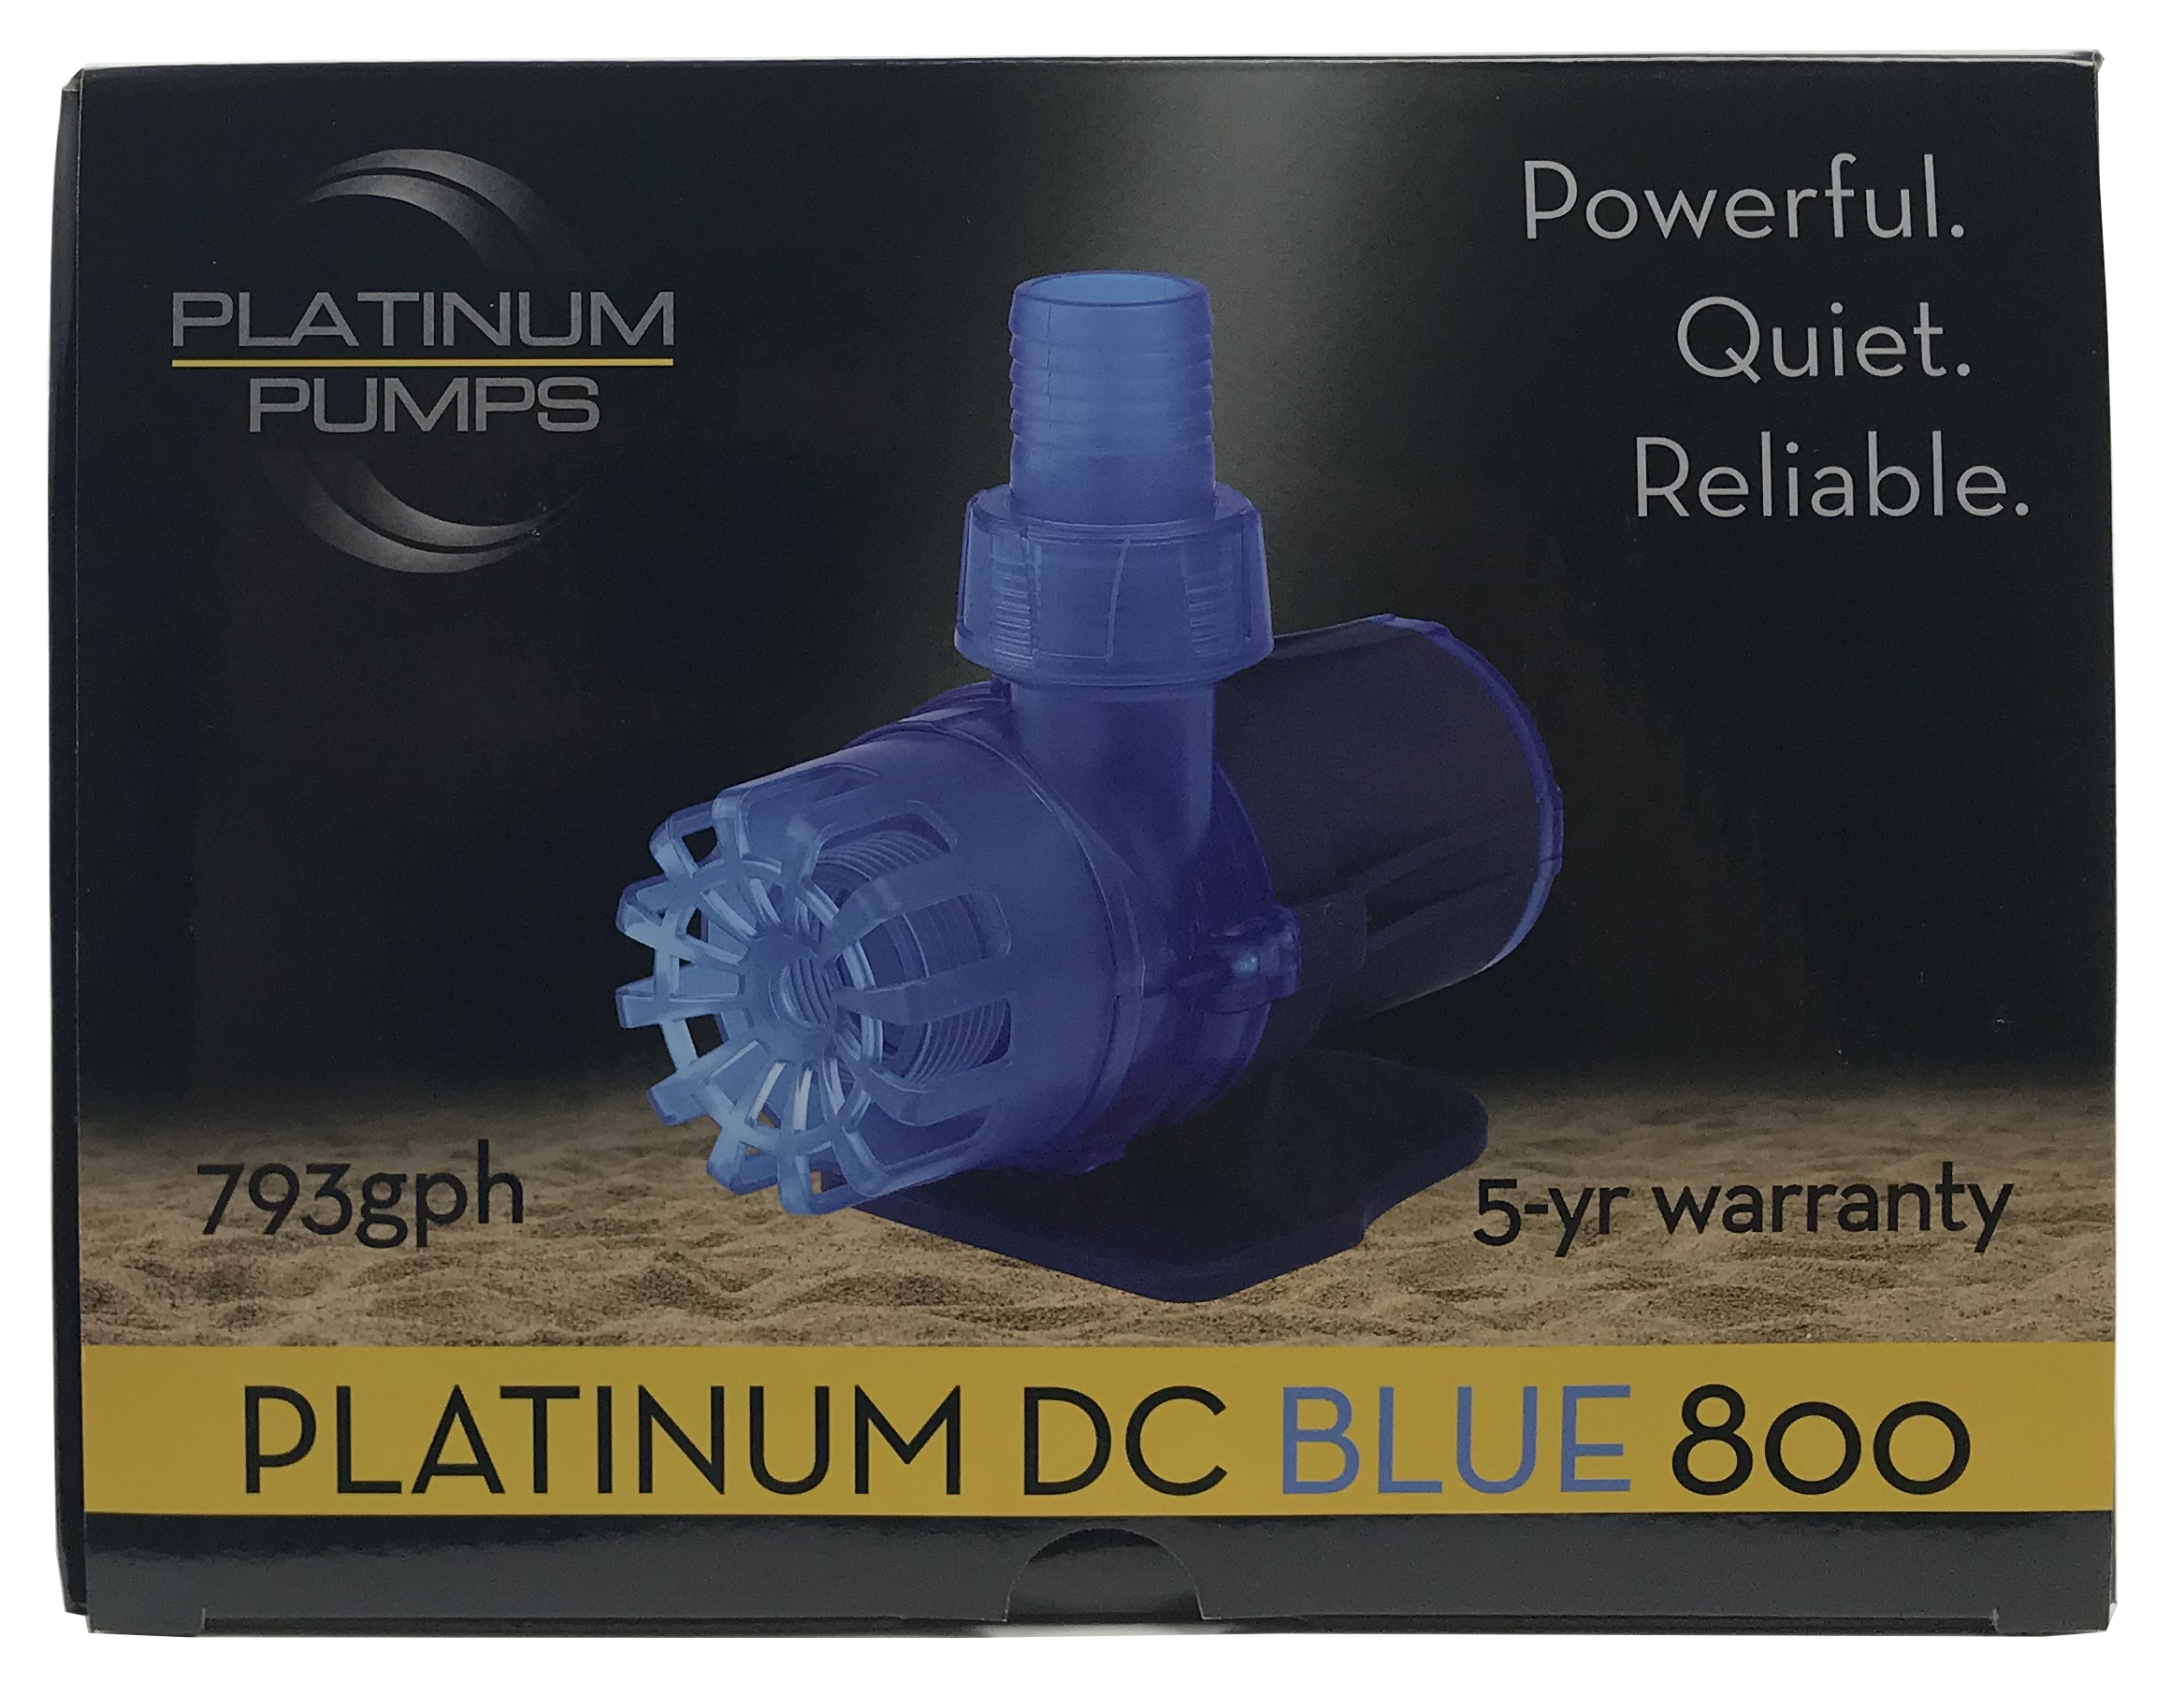 Platinum DC Blue 800 Pump - 793 gph